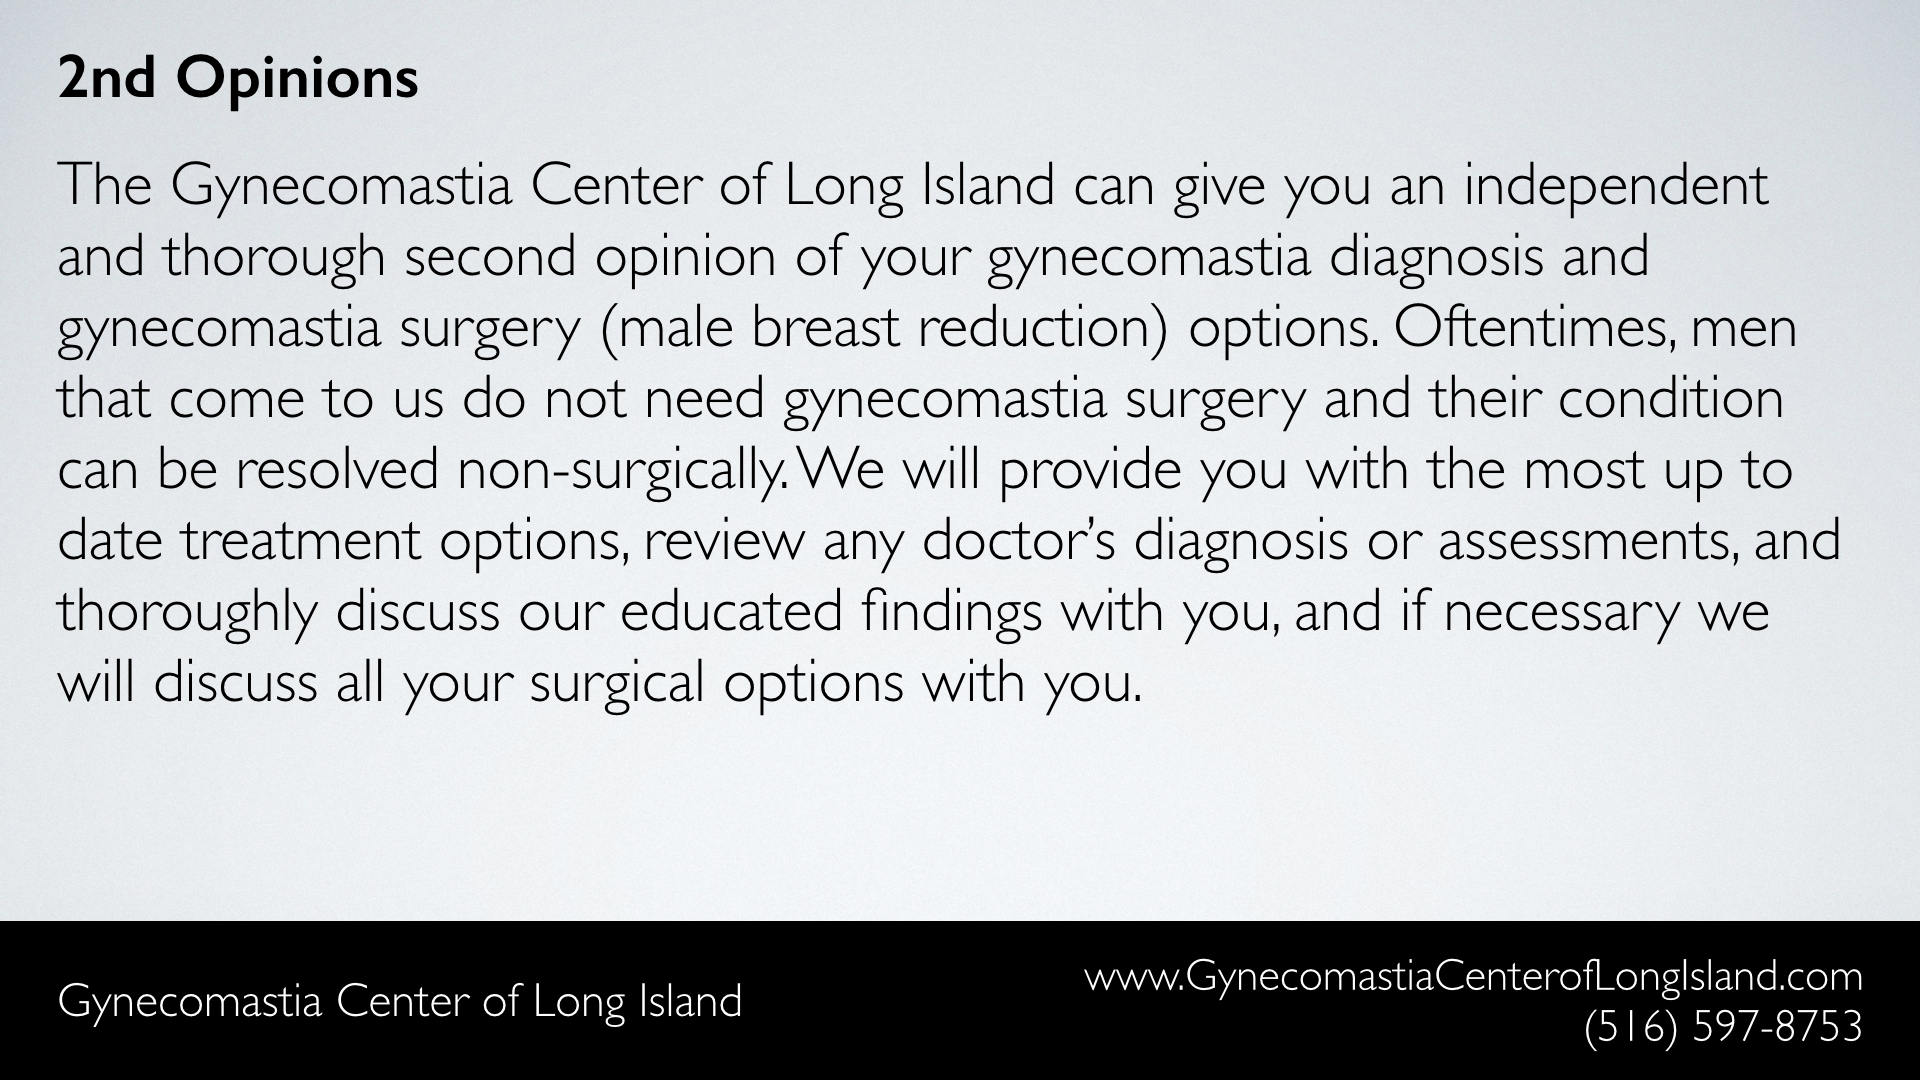 Gynecomastia Center of Long Island (Manhasset NY) - 2nd Opinions